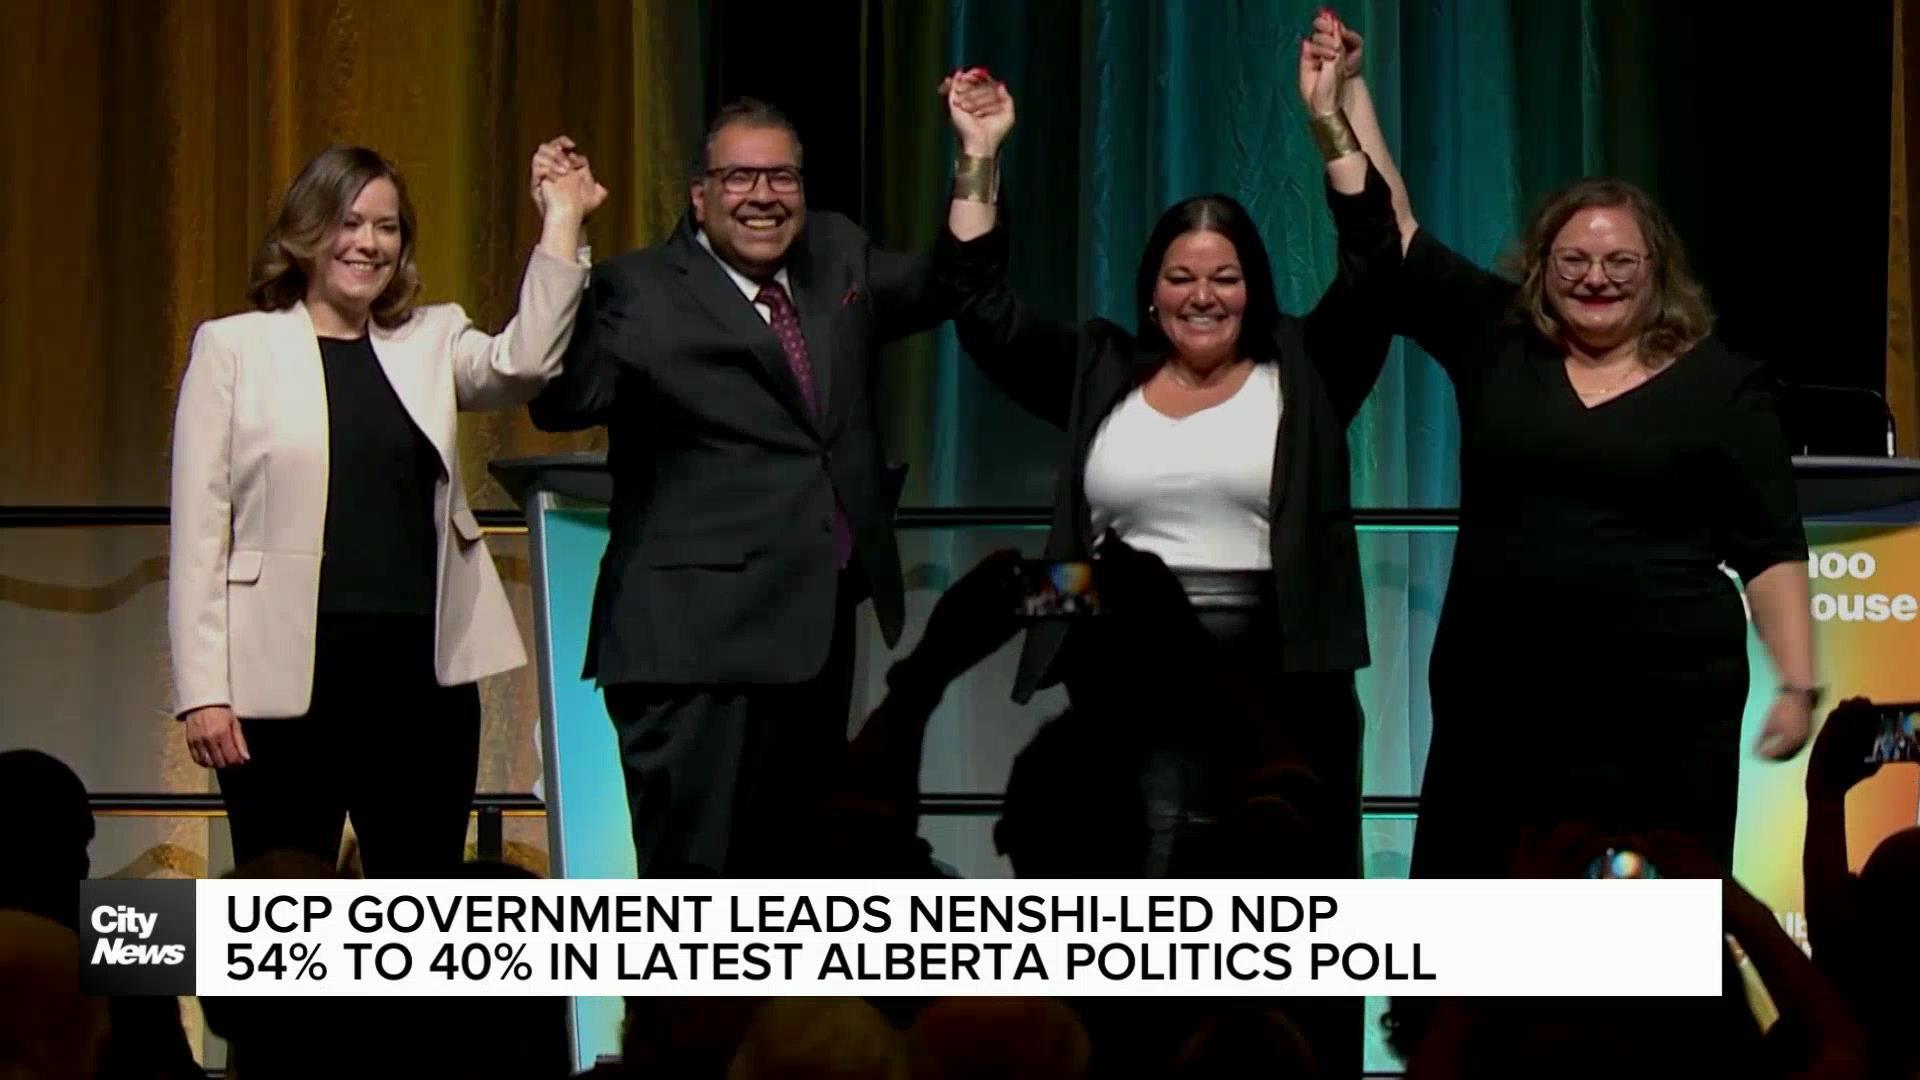 No Nenshi bump yet for Alberta NDP